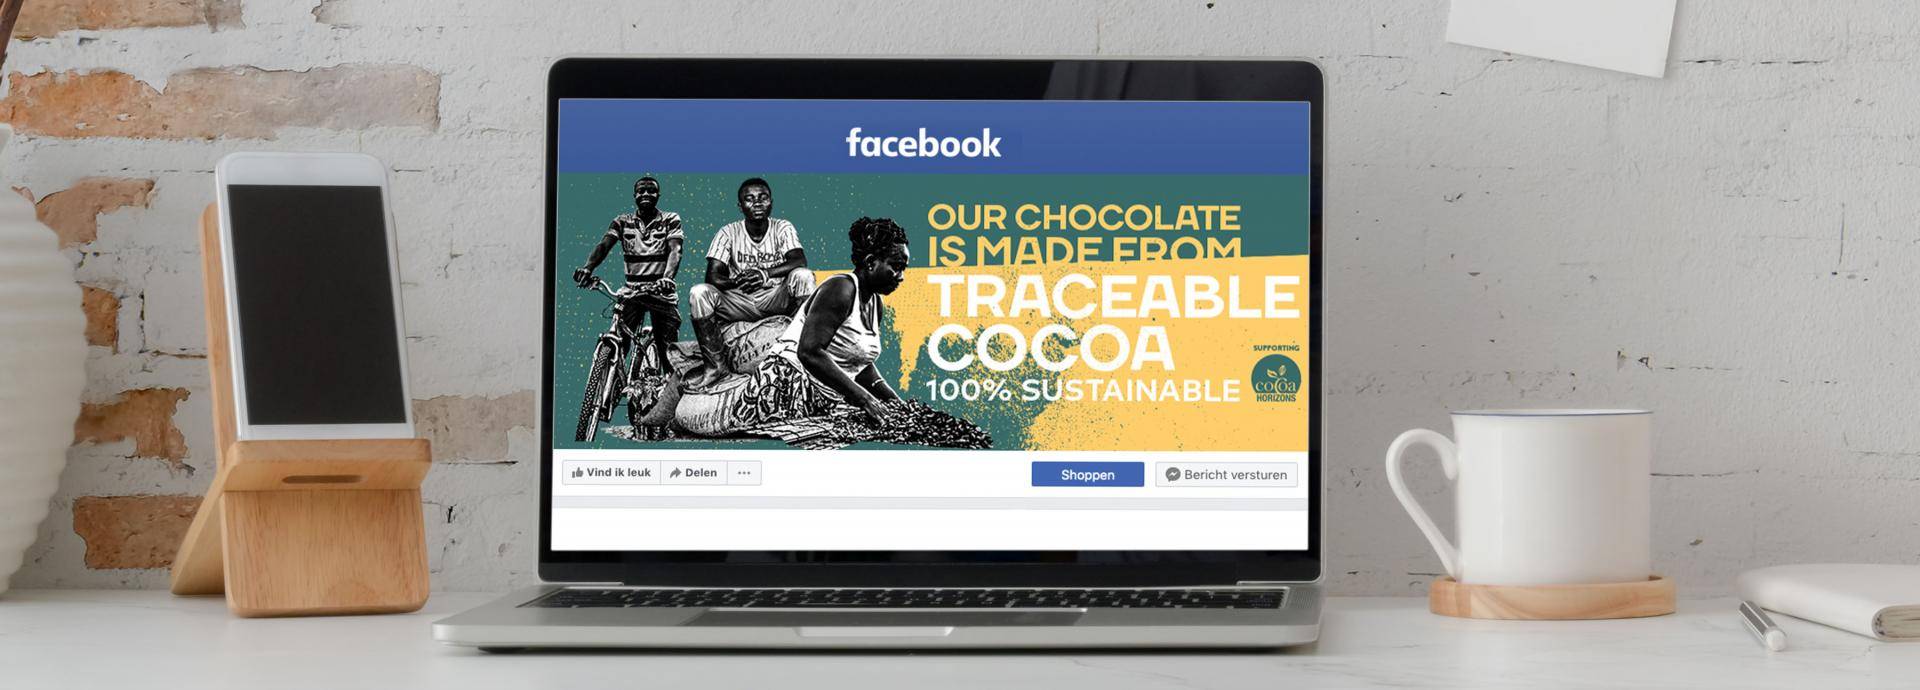 Callebaut Facebook header to make your mark for prospering cocoa farmers on social media